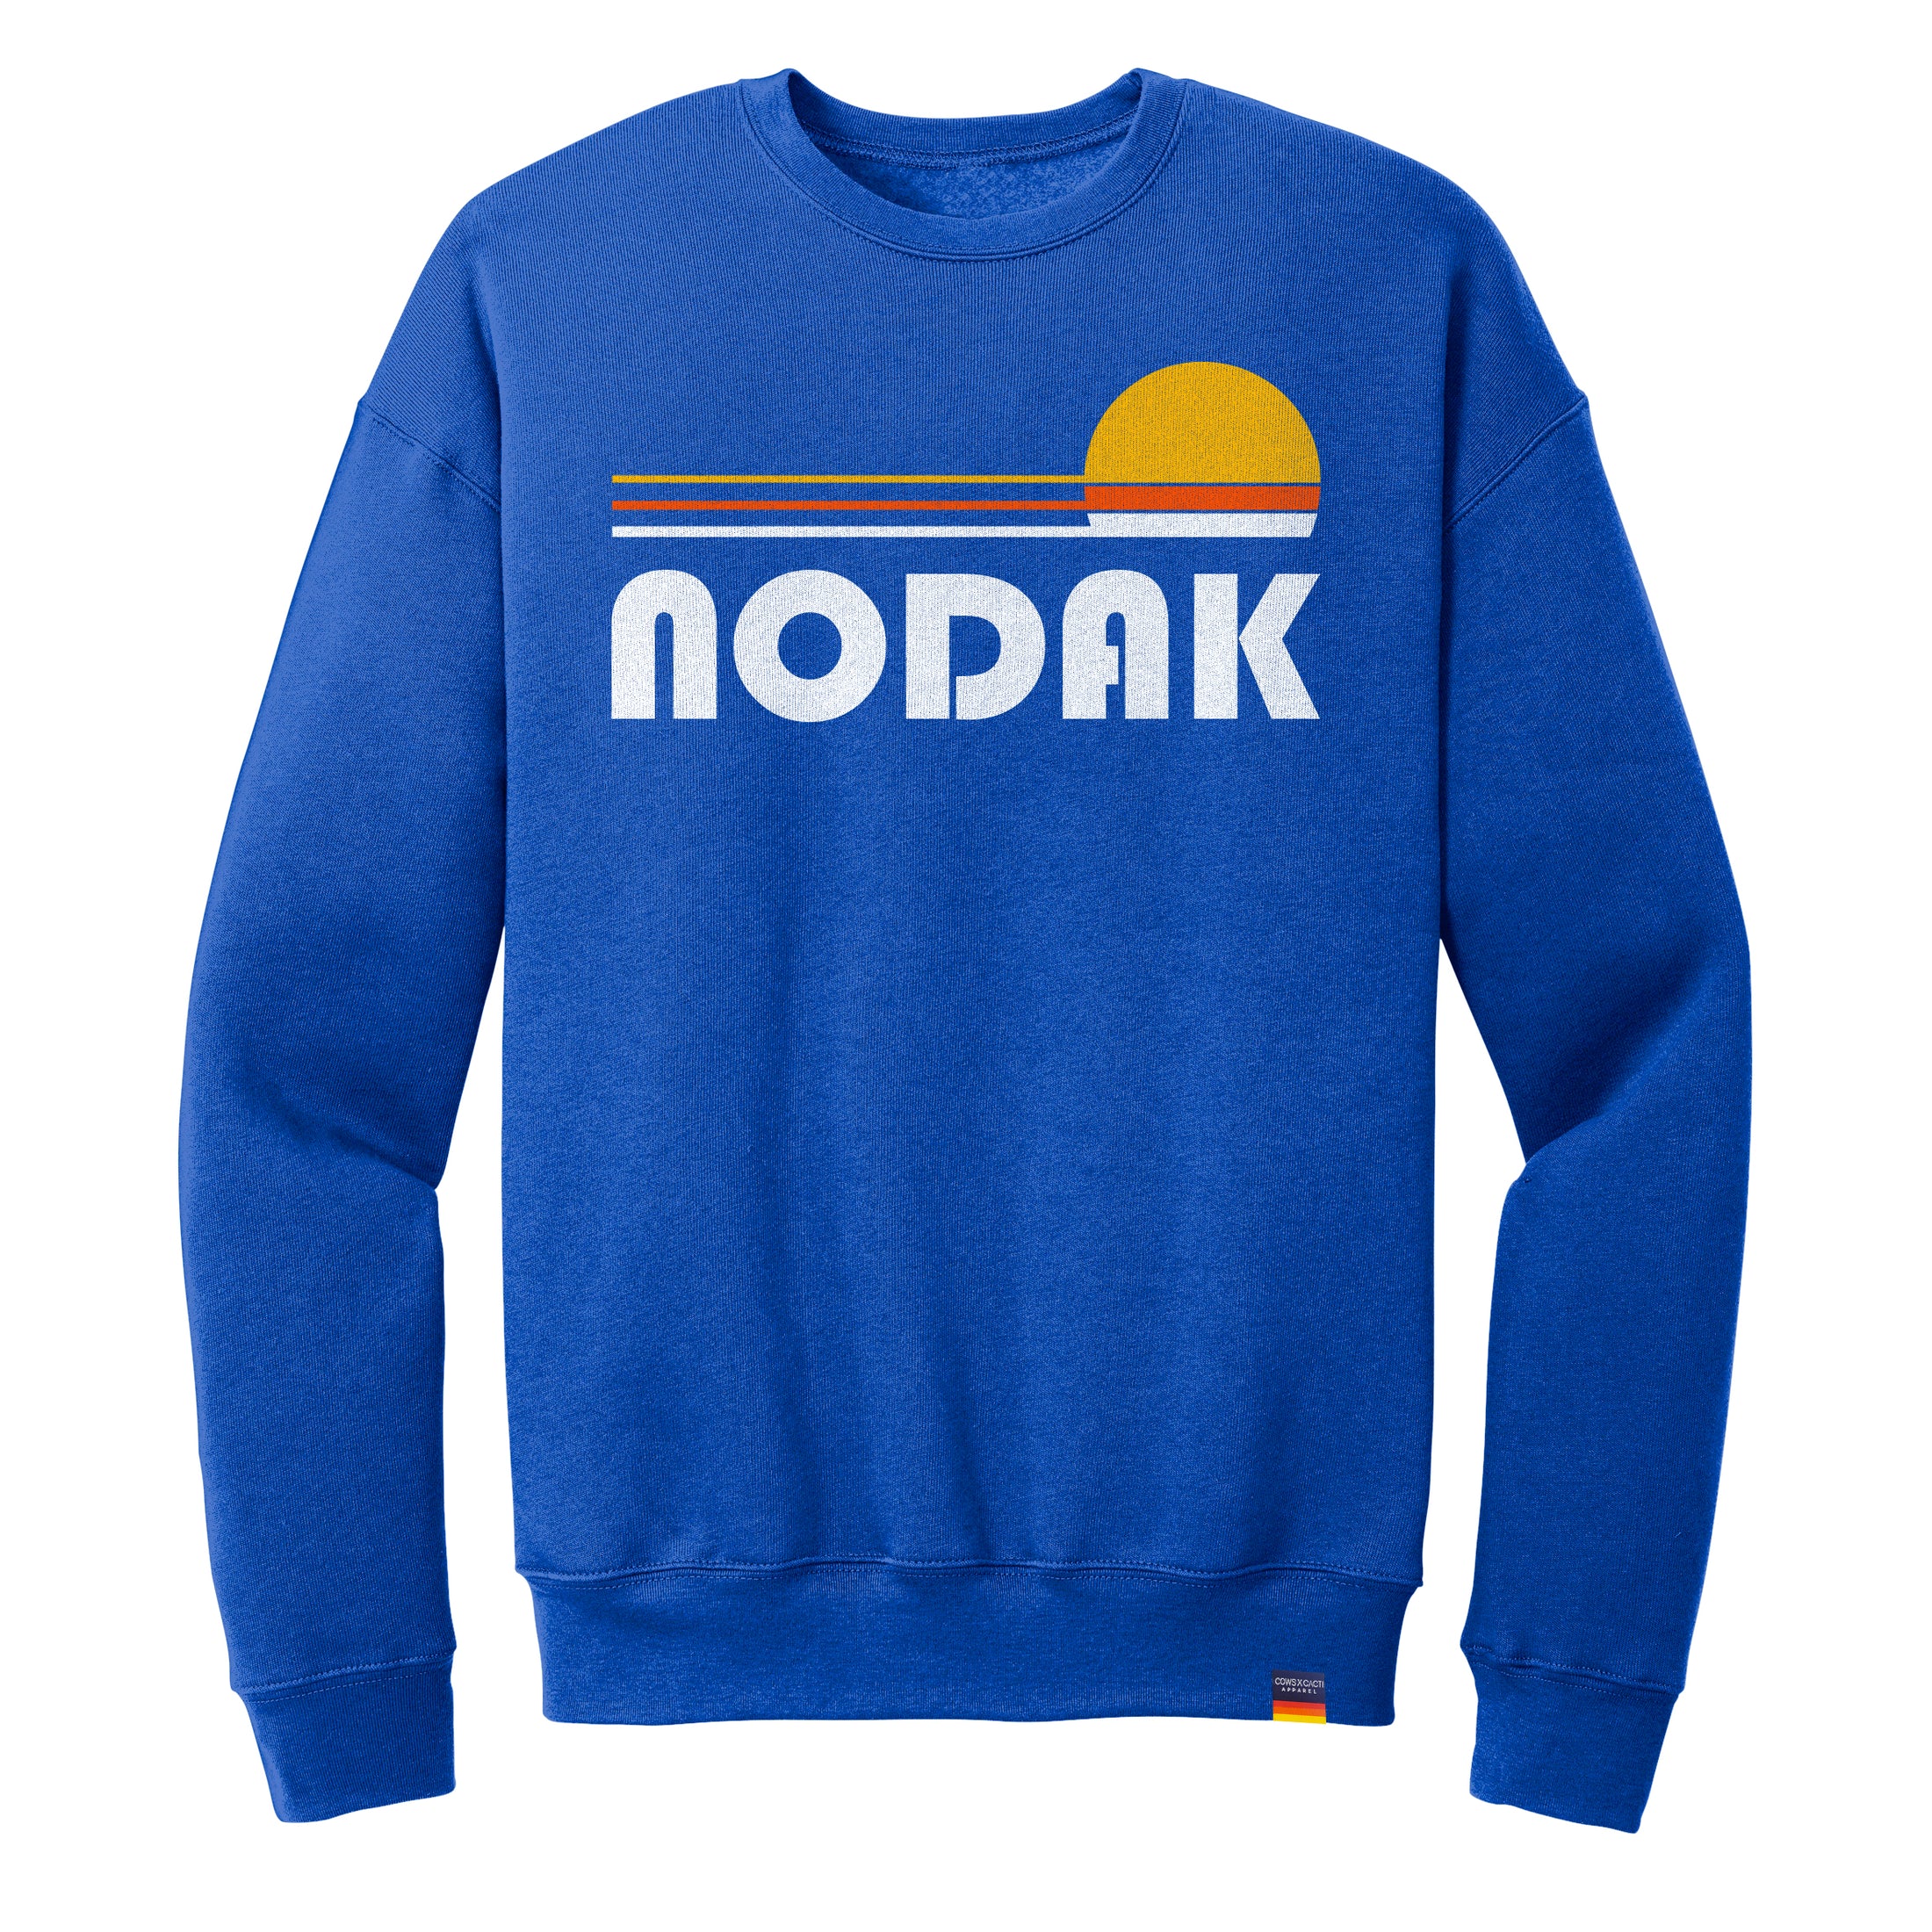 NoDak Sunrise Royal Crew Sweatshirt